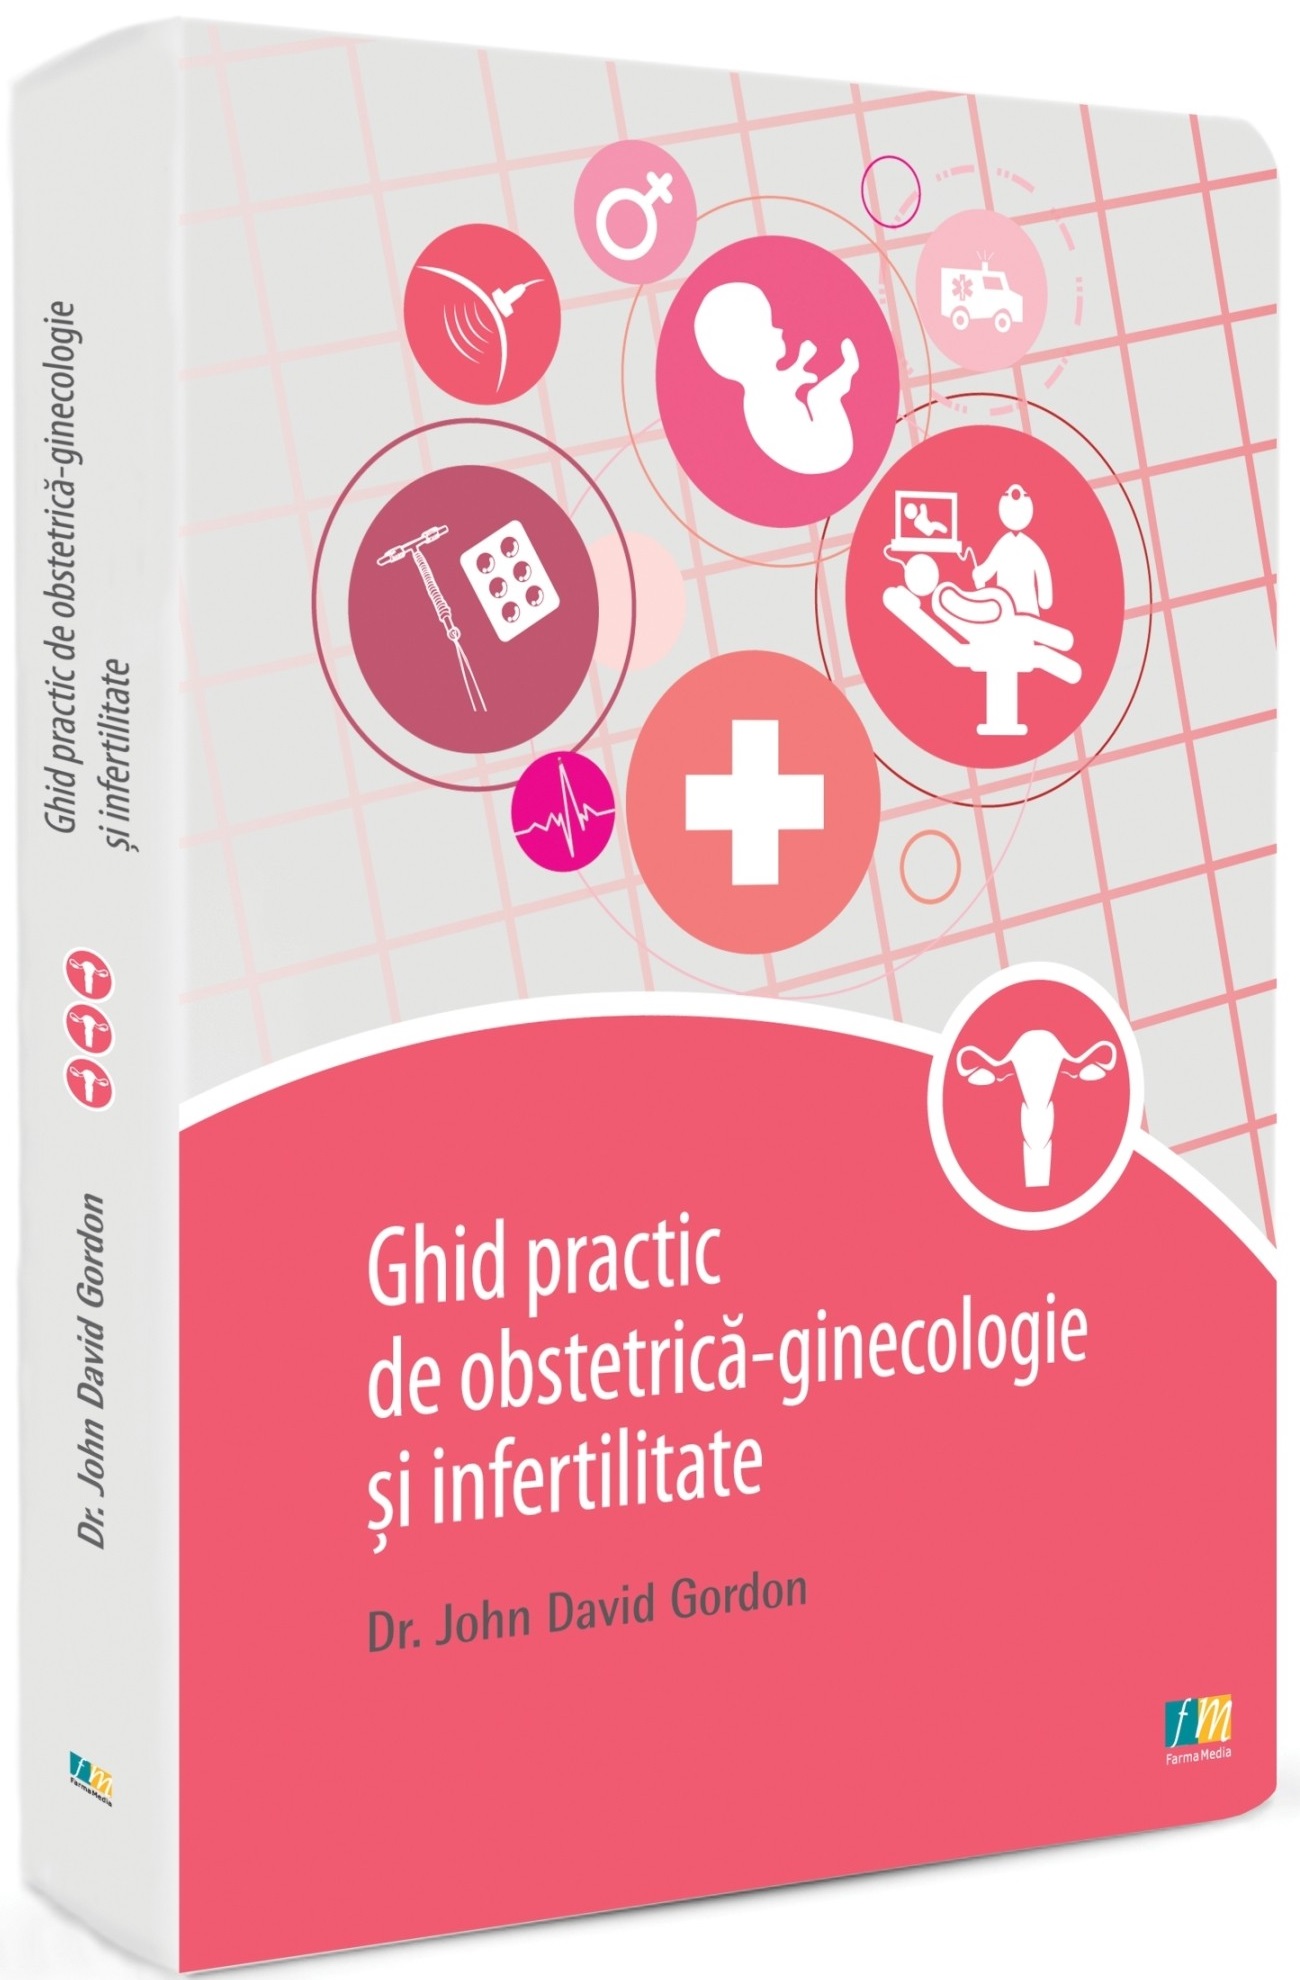 PDF Ghid practic de obstetrica-ginecologie si infertilitate | John David Gordon carturesti.ro Carte